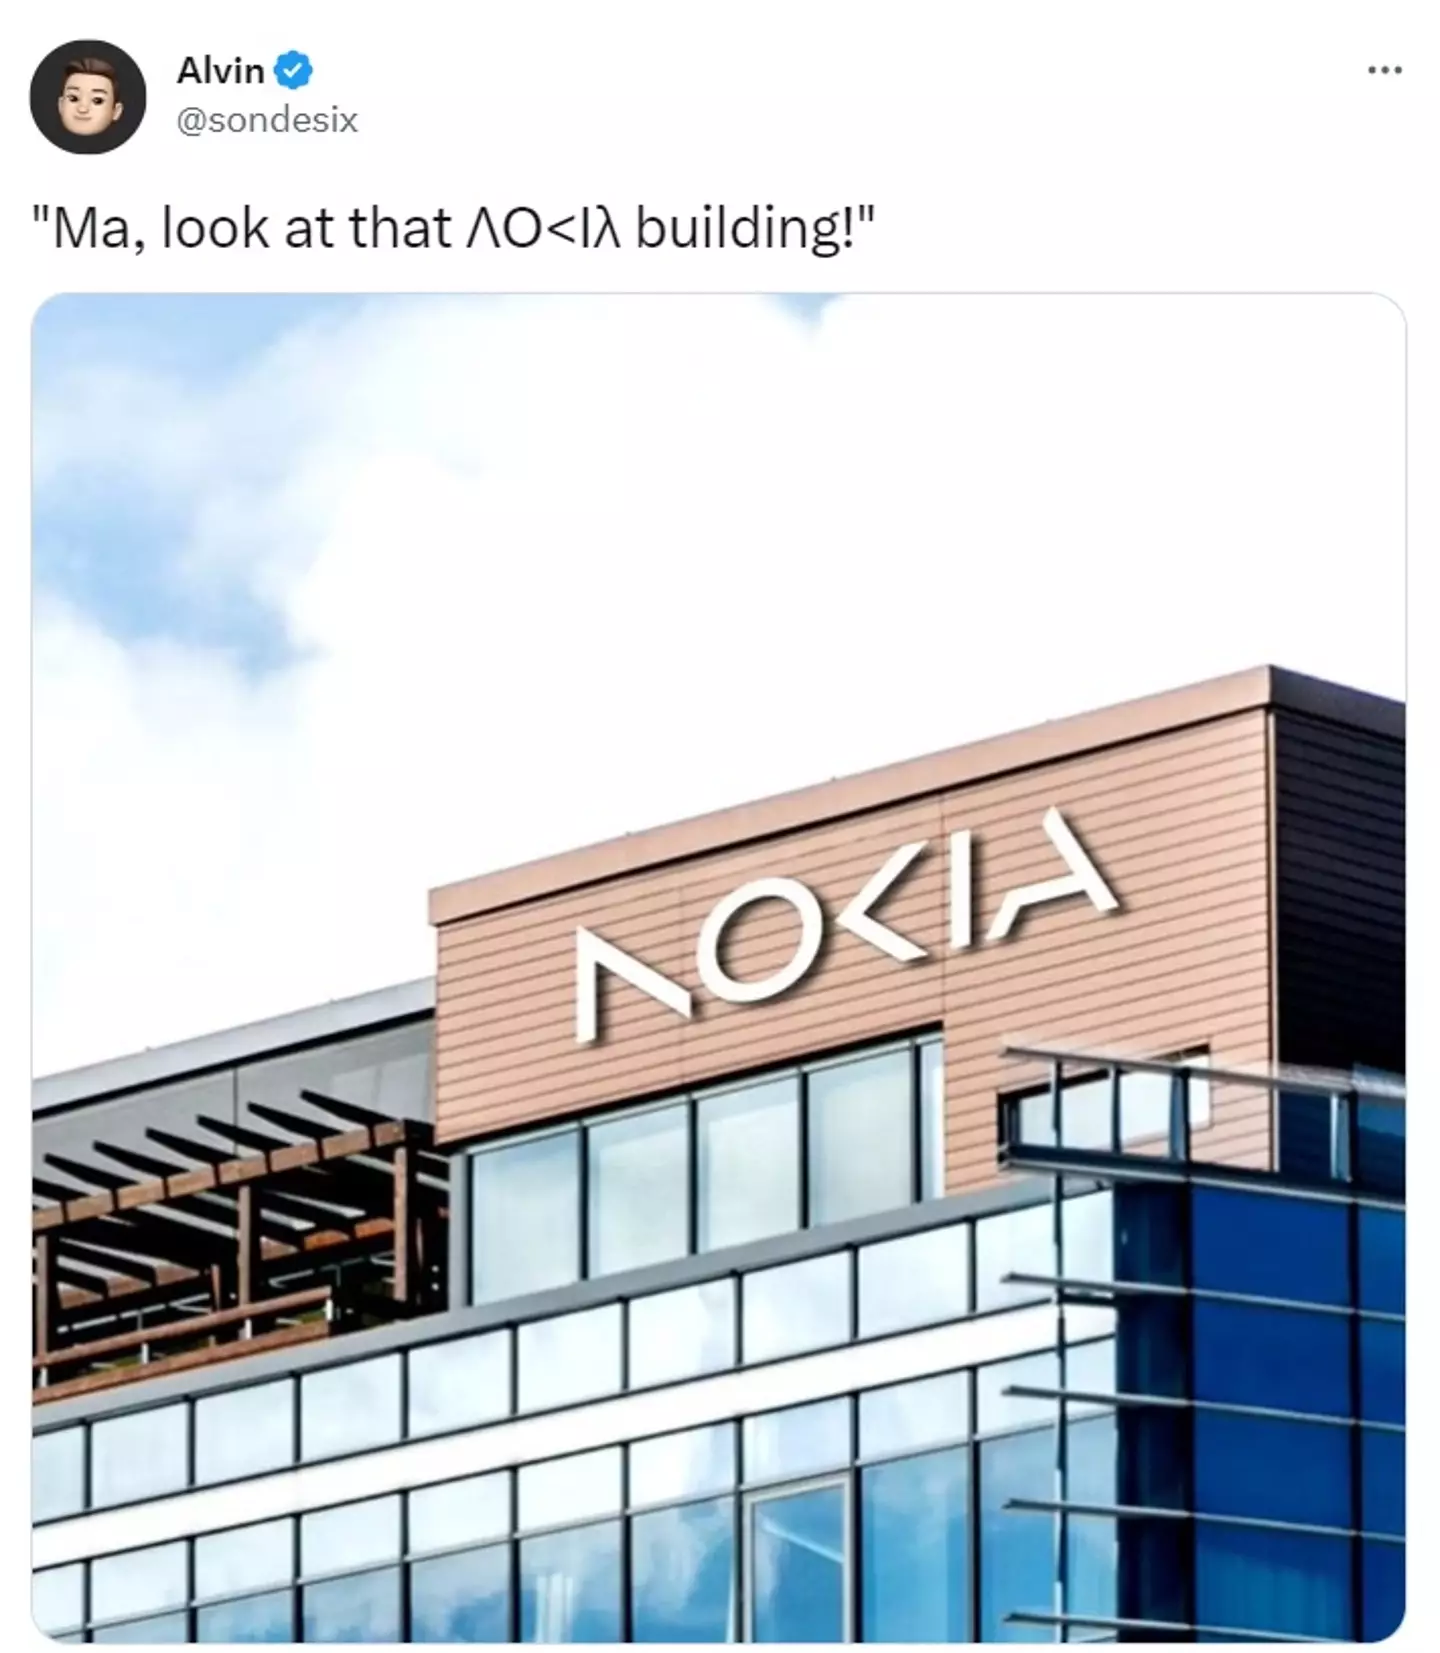 Nokia's new logo doesn't really look like the word 'Nokia' any more.